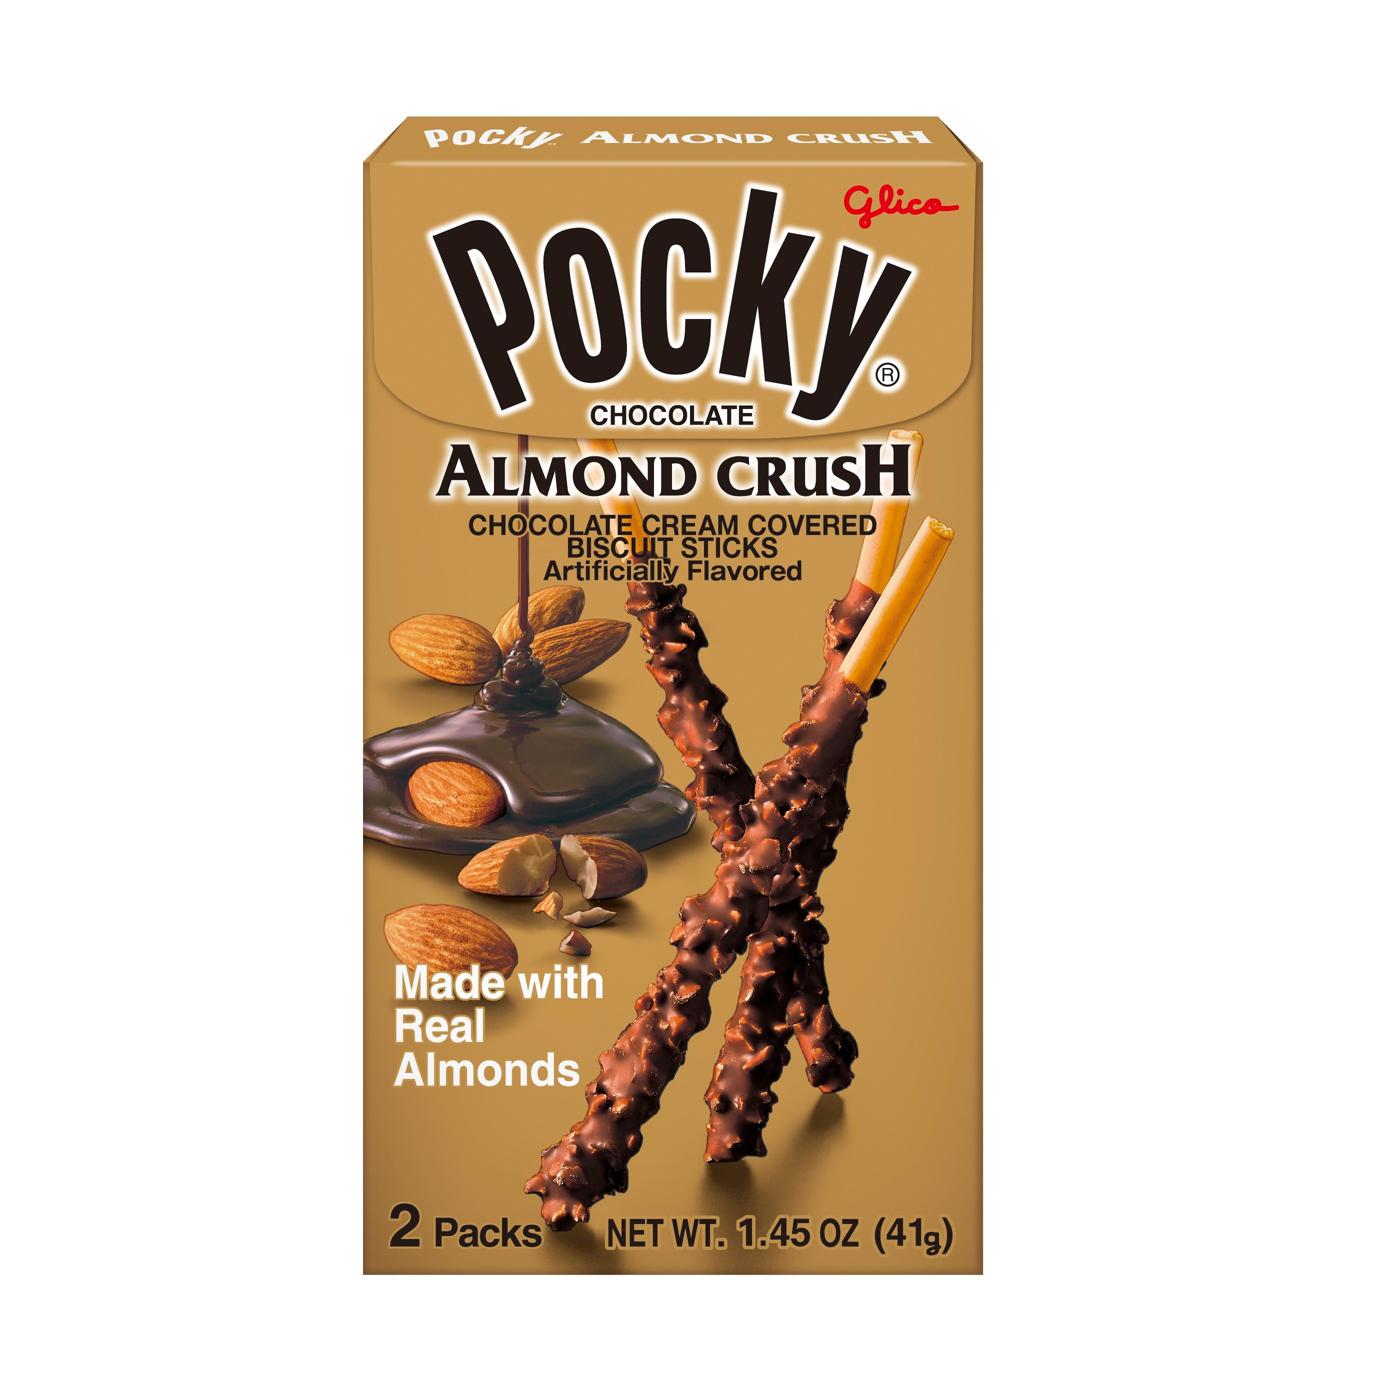 POCKY Almond Crush Biscuit Sticks; image 1 of 7